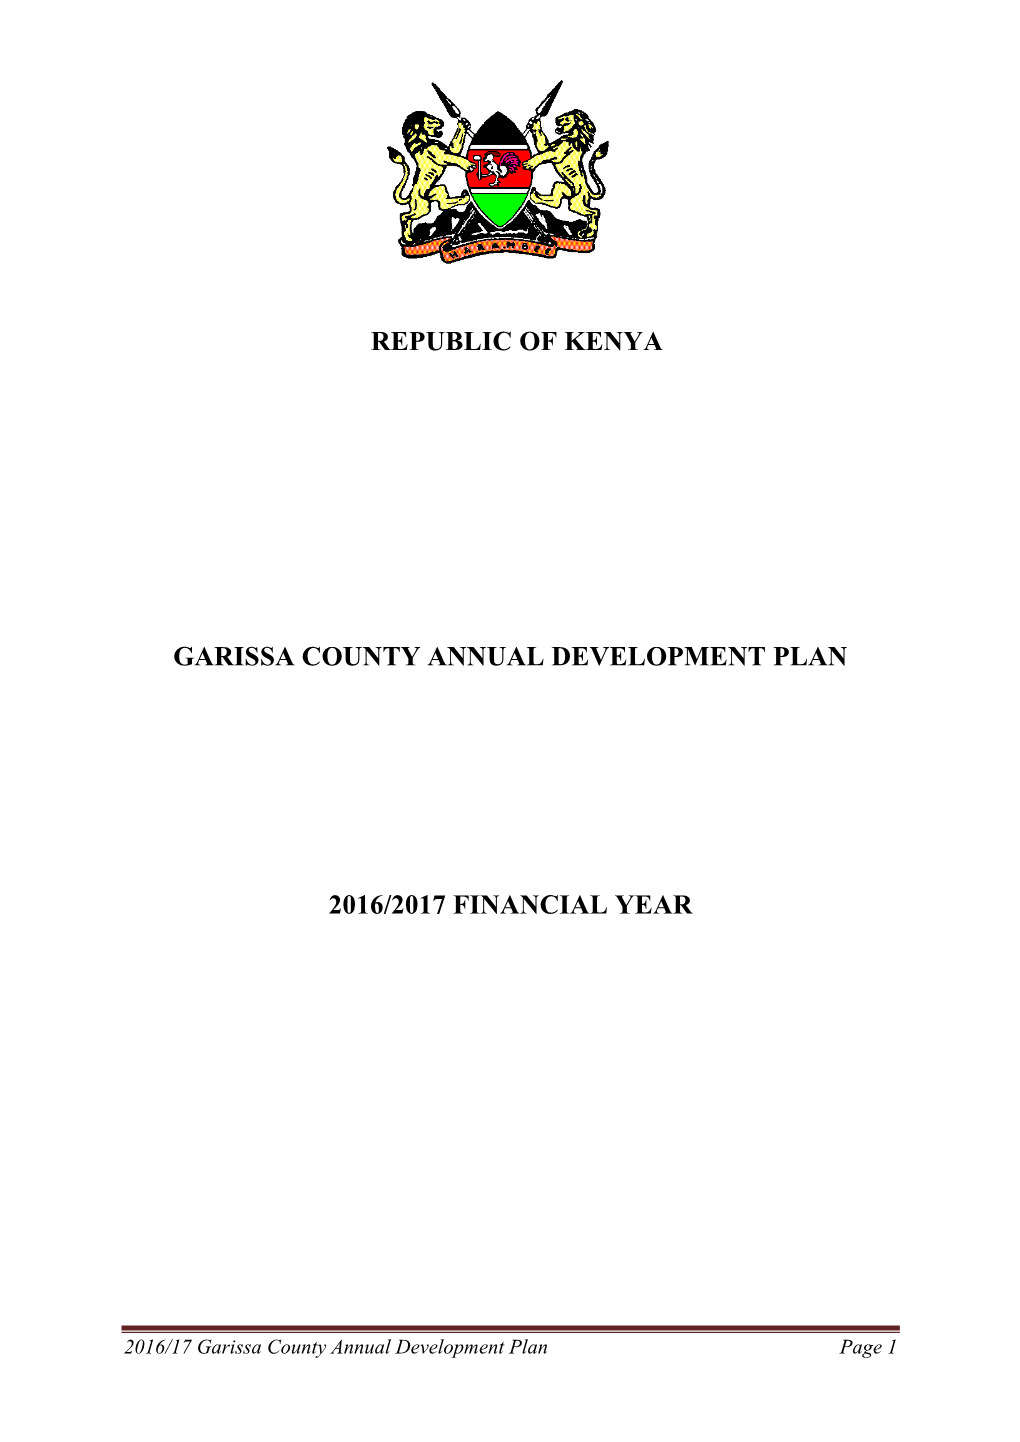 Republic of Kenya Garissa County Annual Development Plan 2016